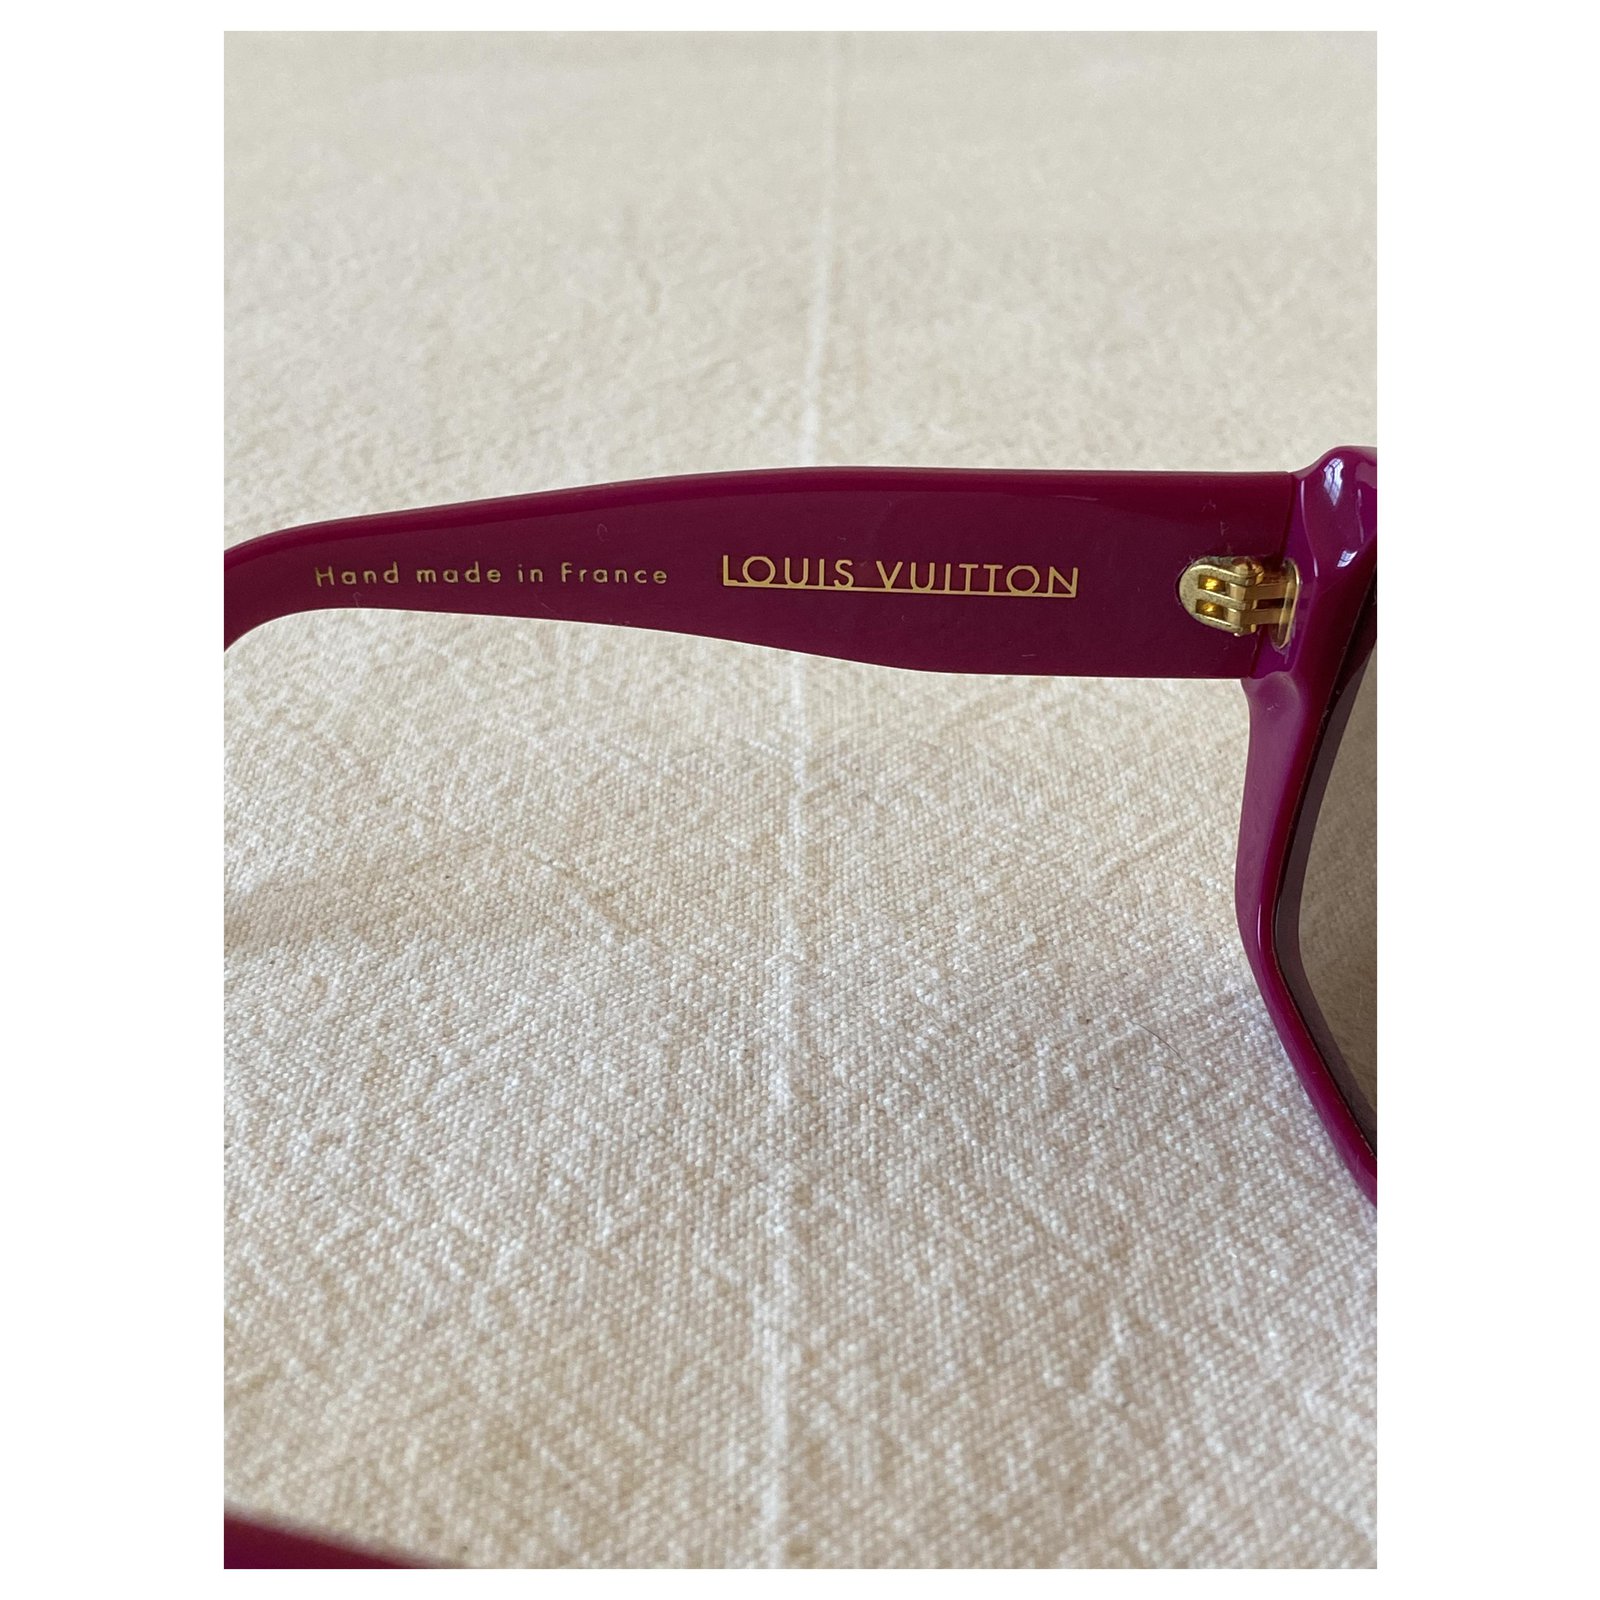 Louis Vuitton LV Shadow Square Sunglasses Hot Pink Plastic. Size U